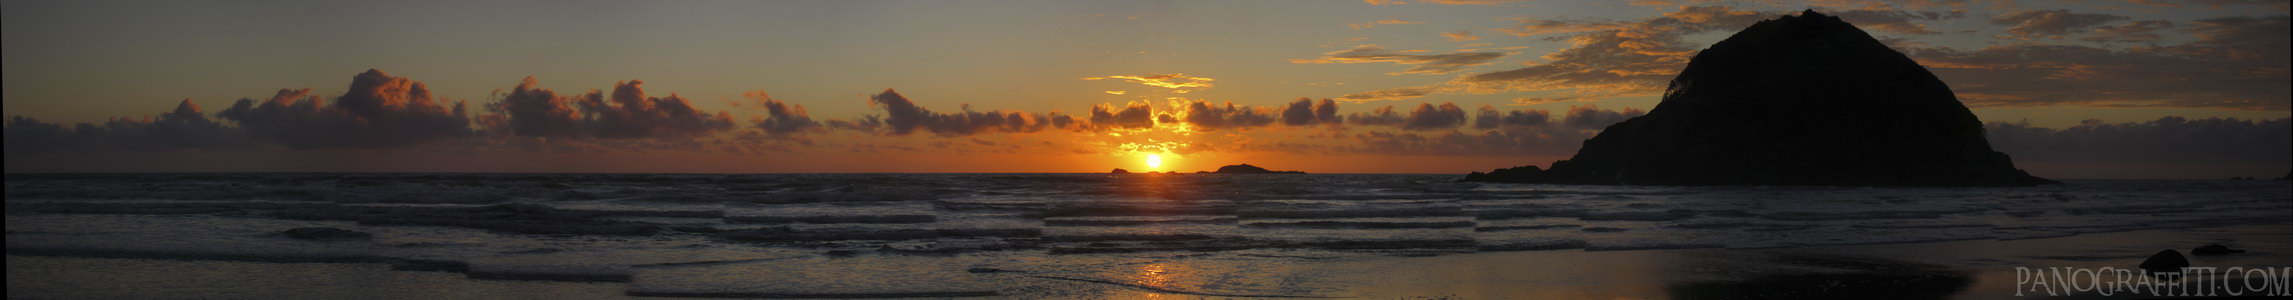 Paritutu Centennial Park Sunset Dark - A beautiful sunset framed by large rocks on a beach near New Plymouth